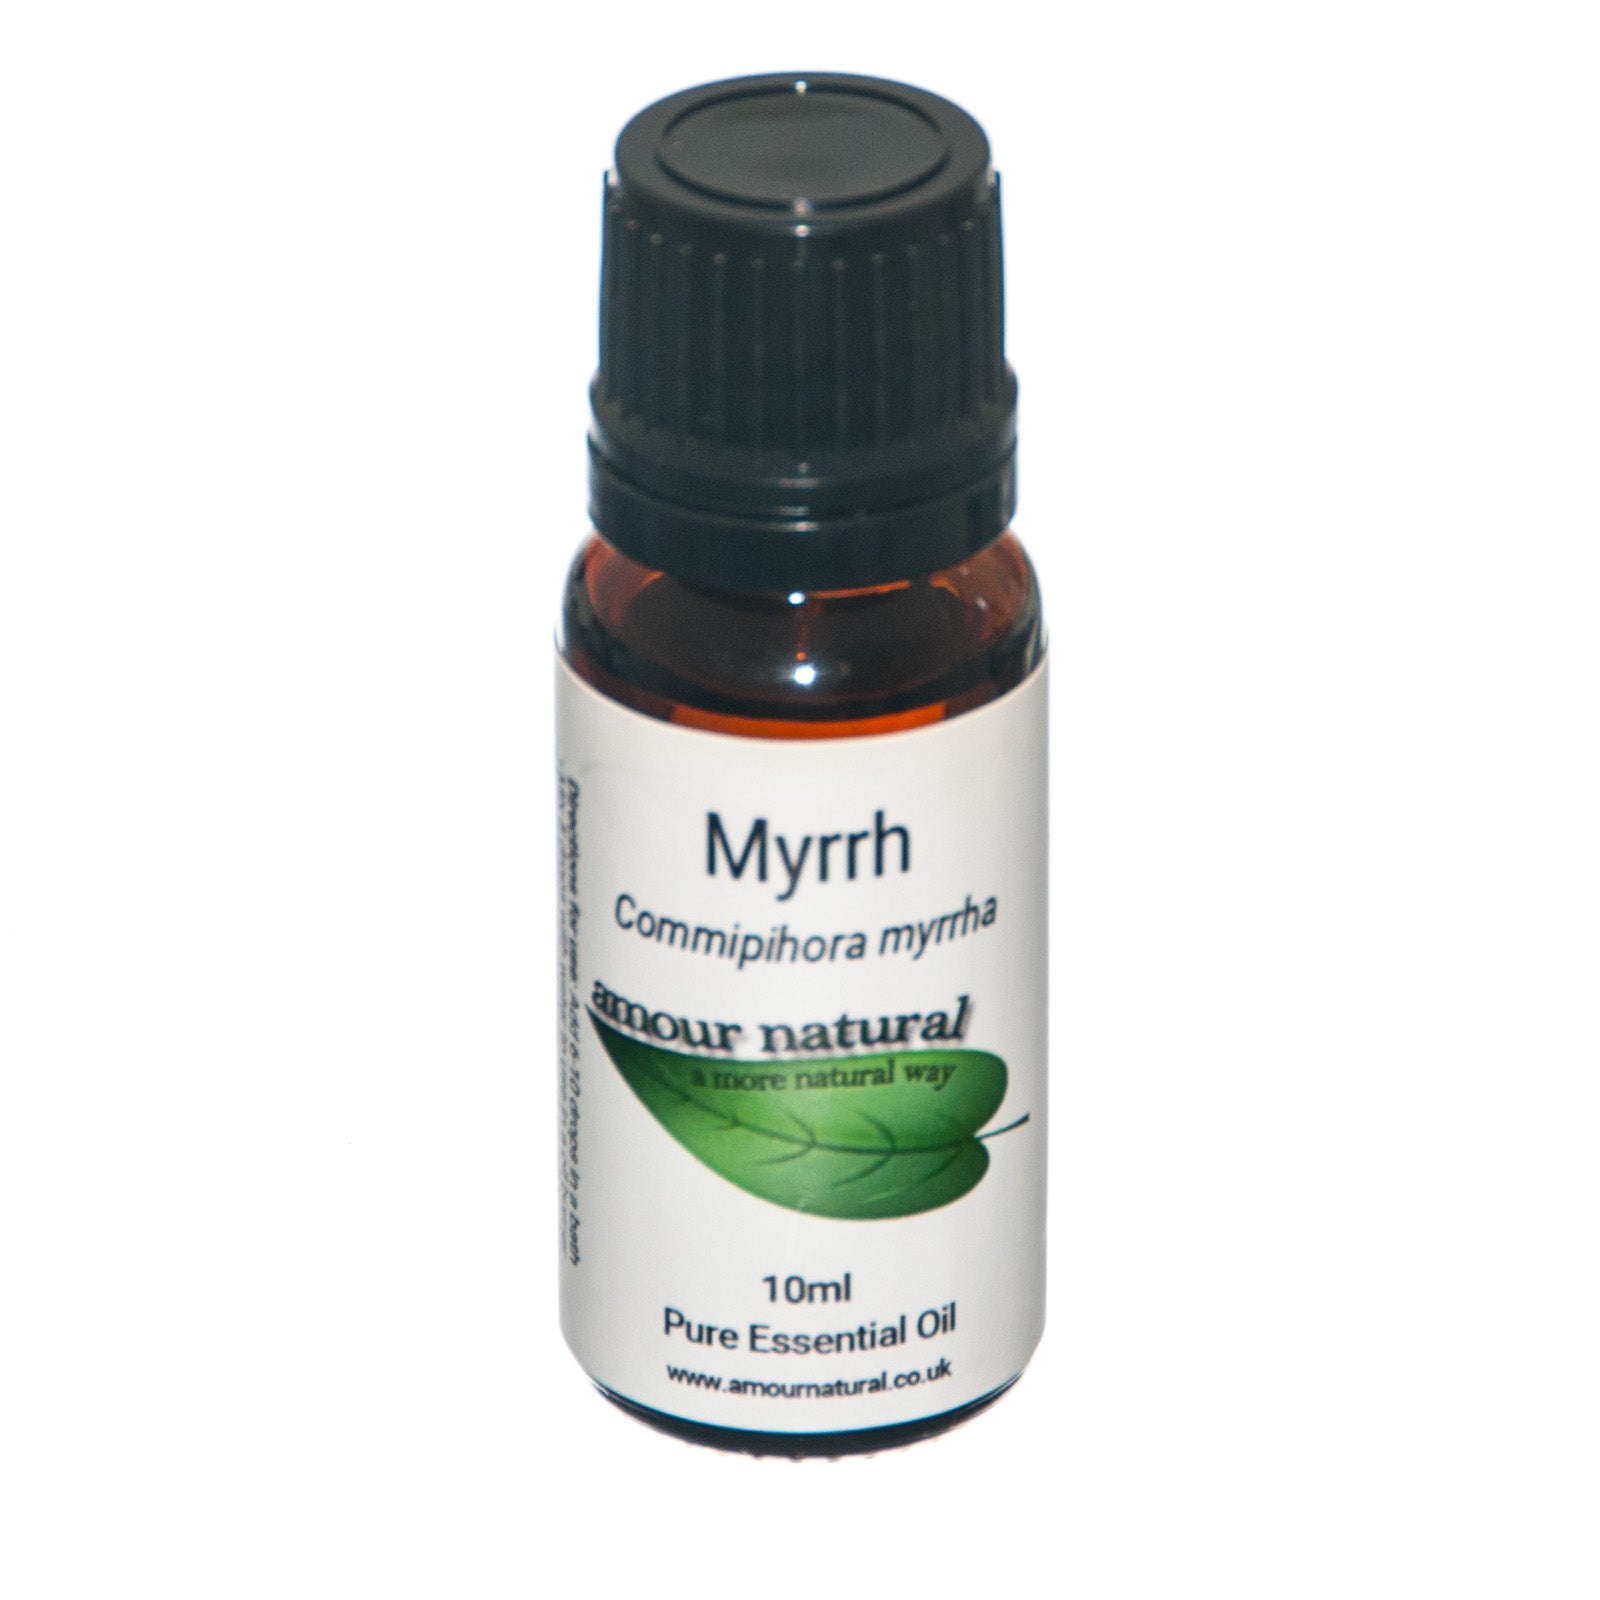 Amour Natural Myrrh Essential Oil 10ml